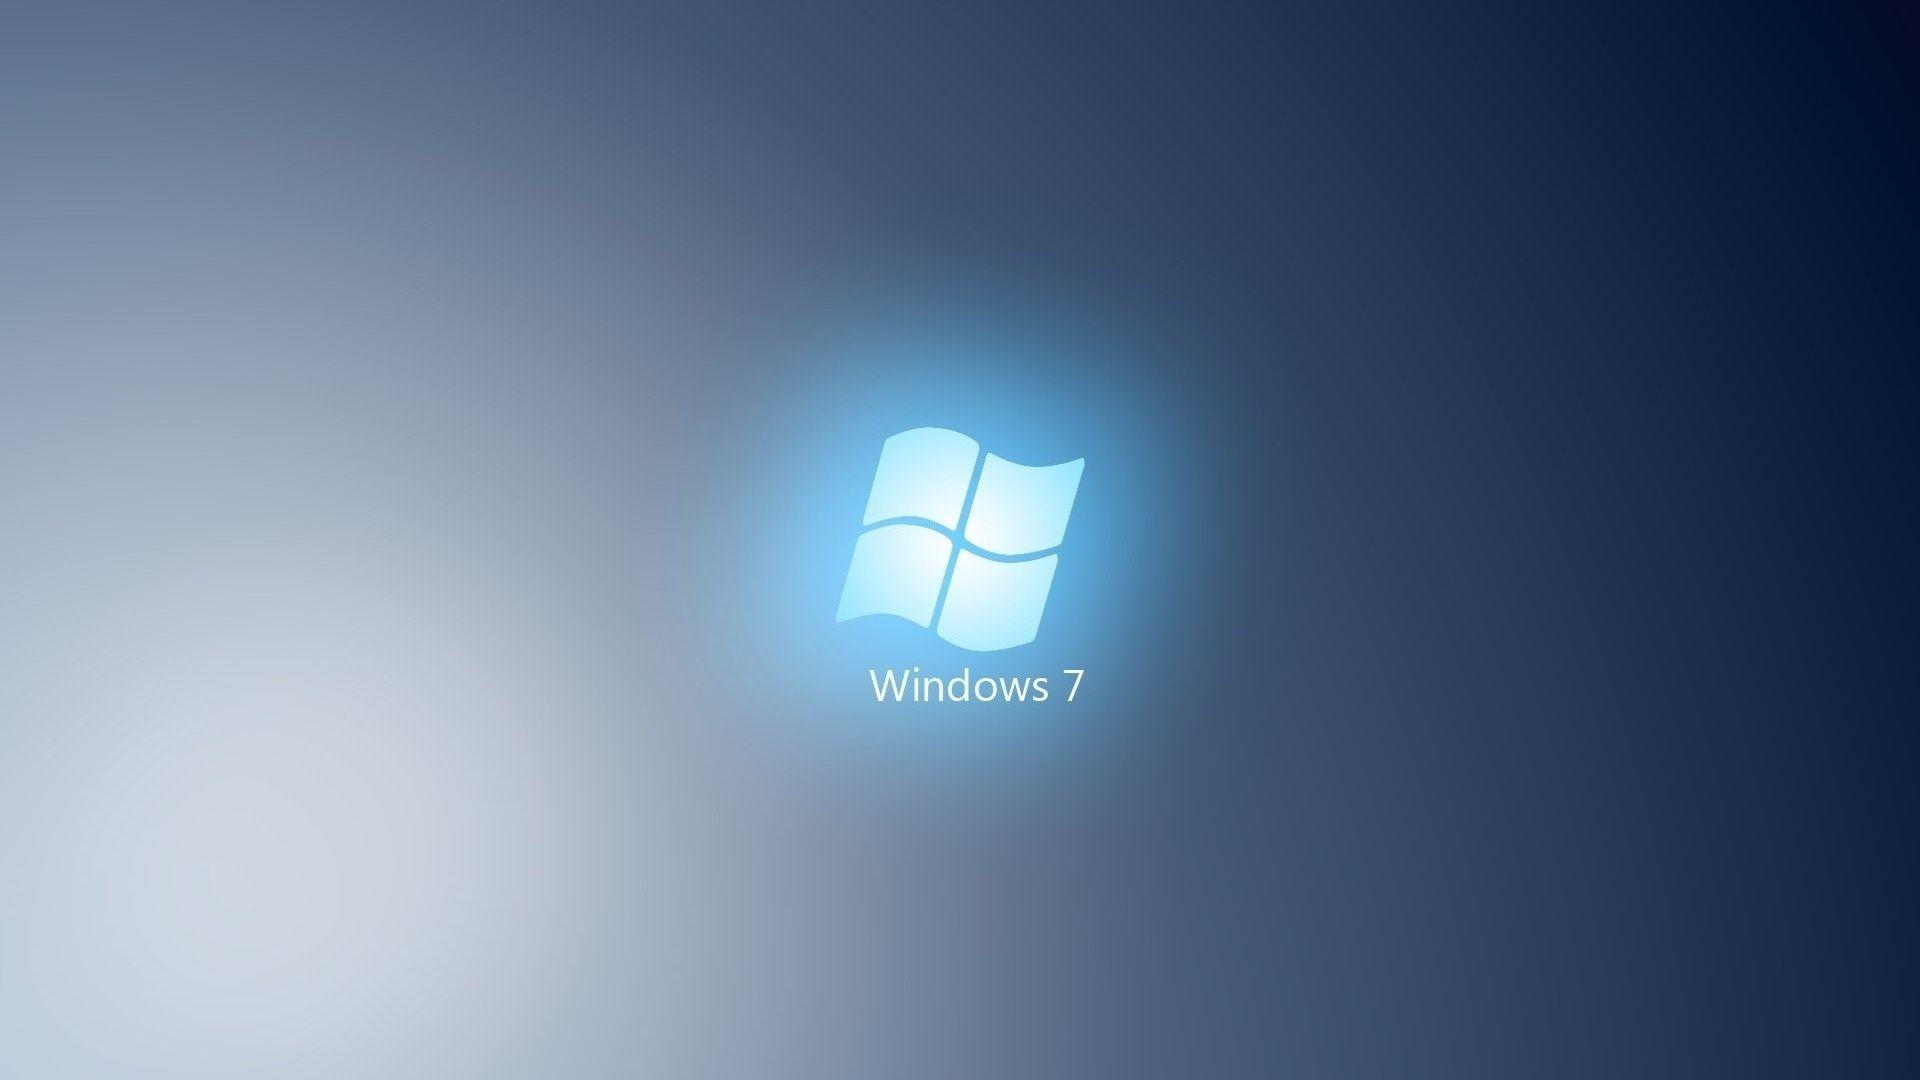 Wallpaper: Picture Of Windows 7 Wallpaper 1920x1080. Windows 7